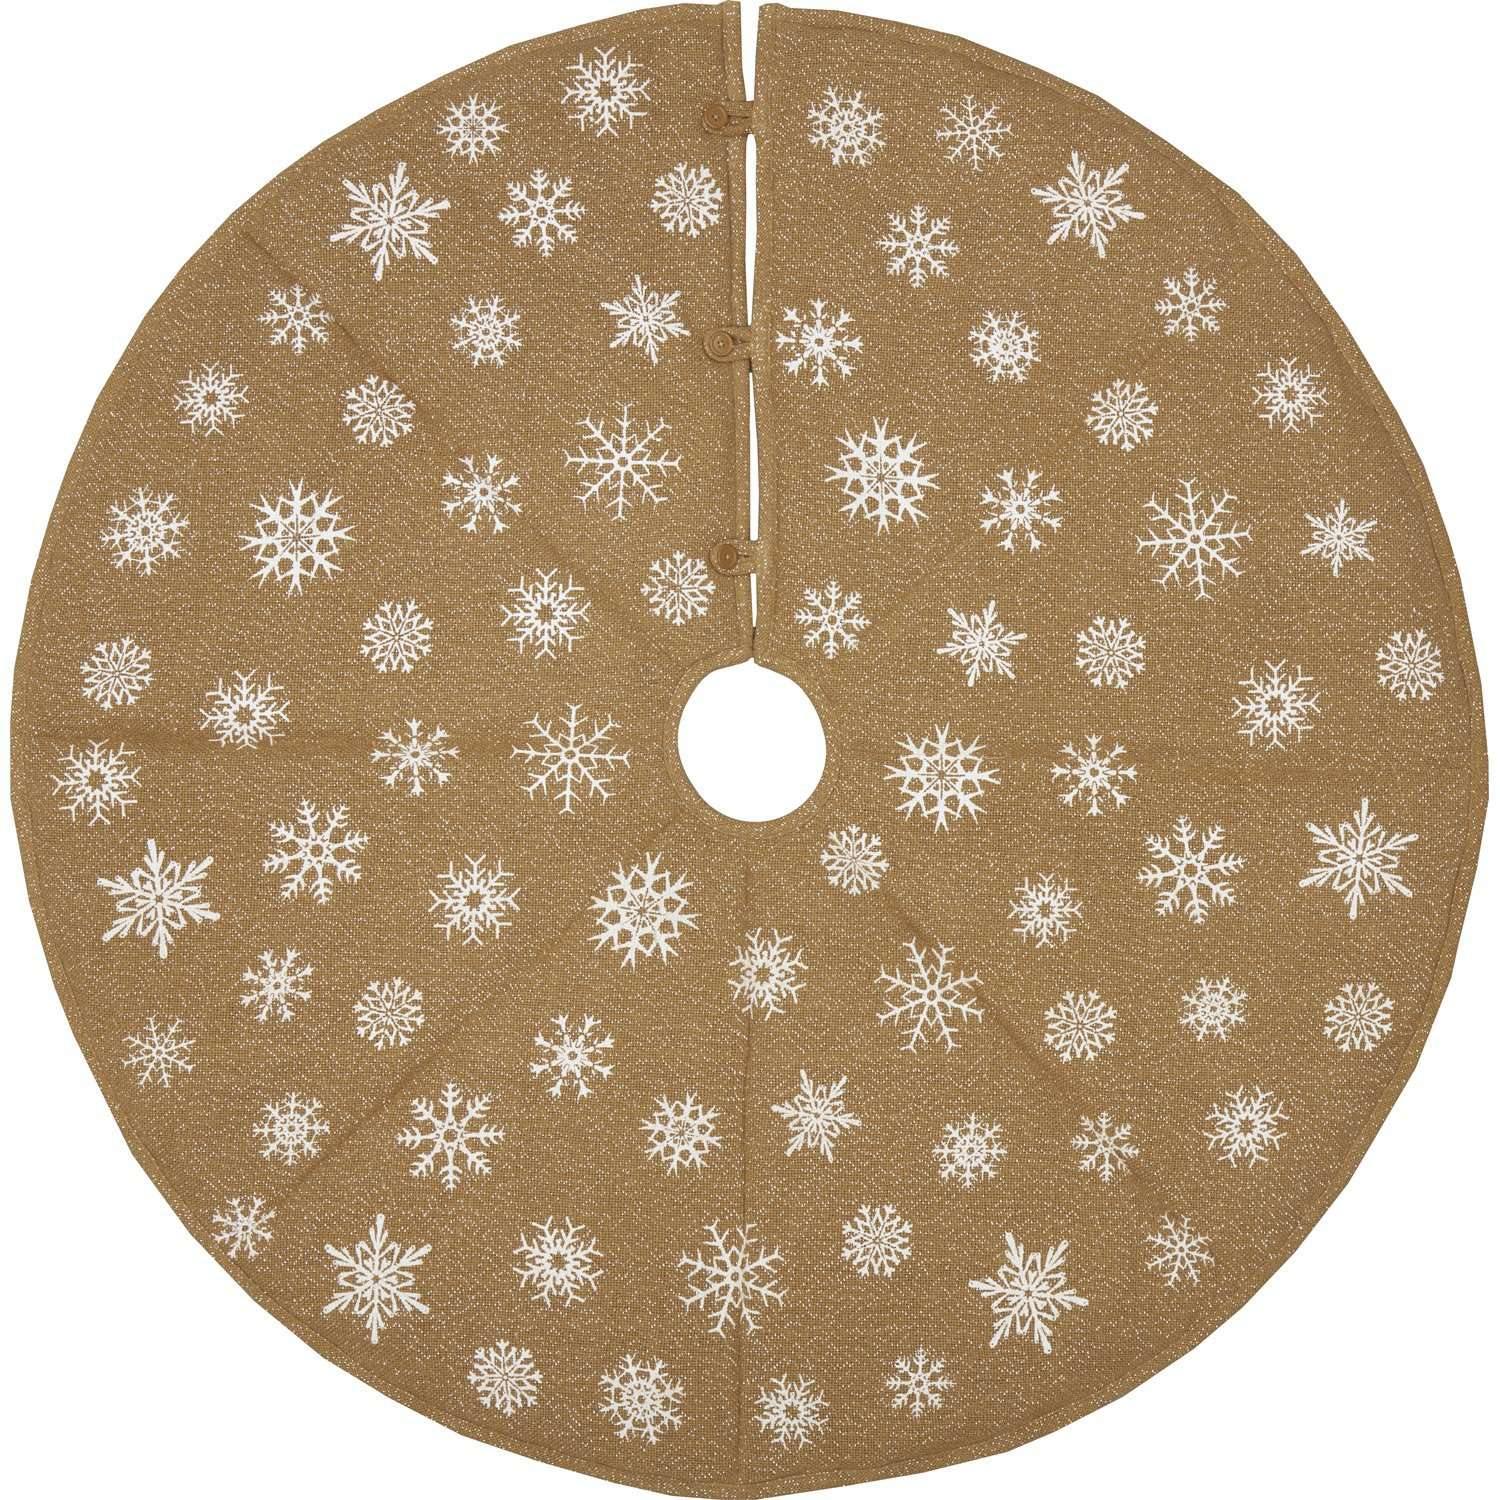 Snowflake Burlap Natural Christmas Tree Skirt 48 VHC Brands - The Fox Decor